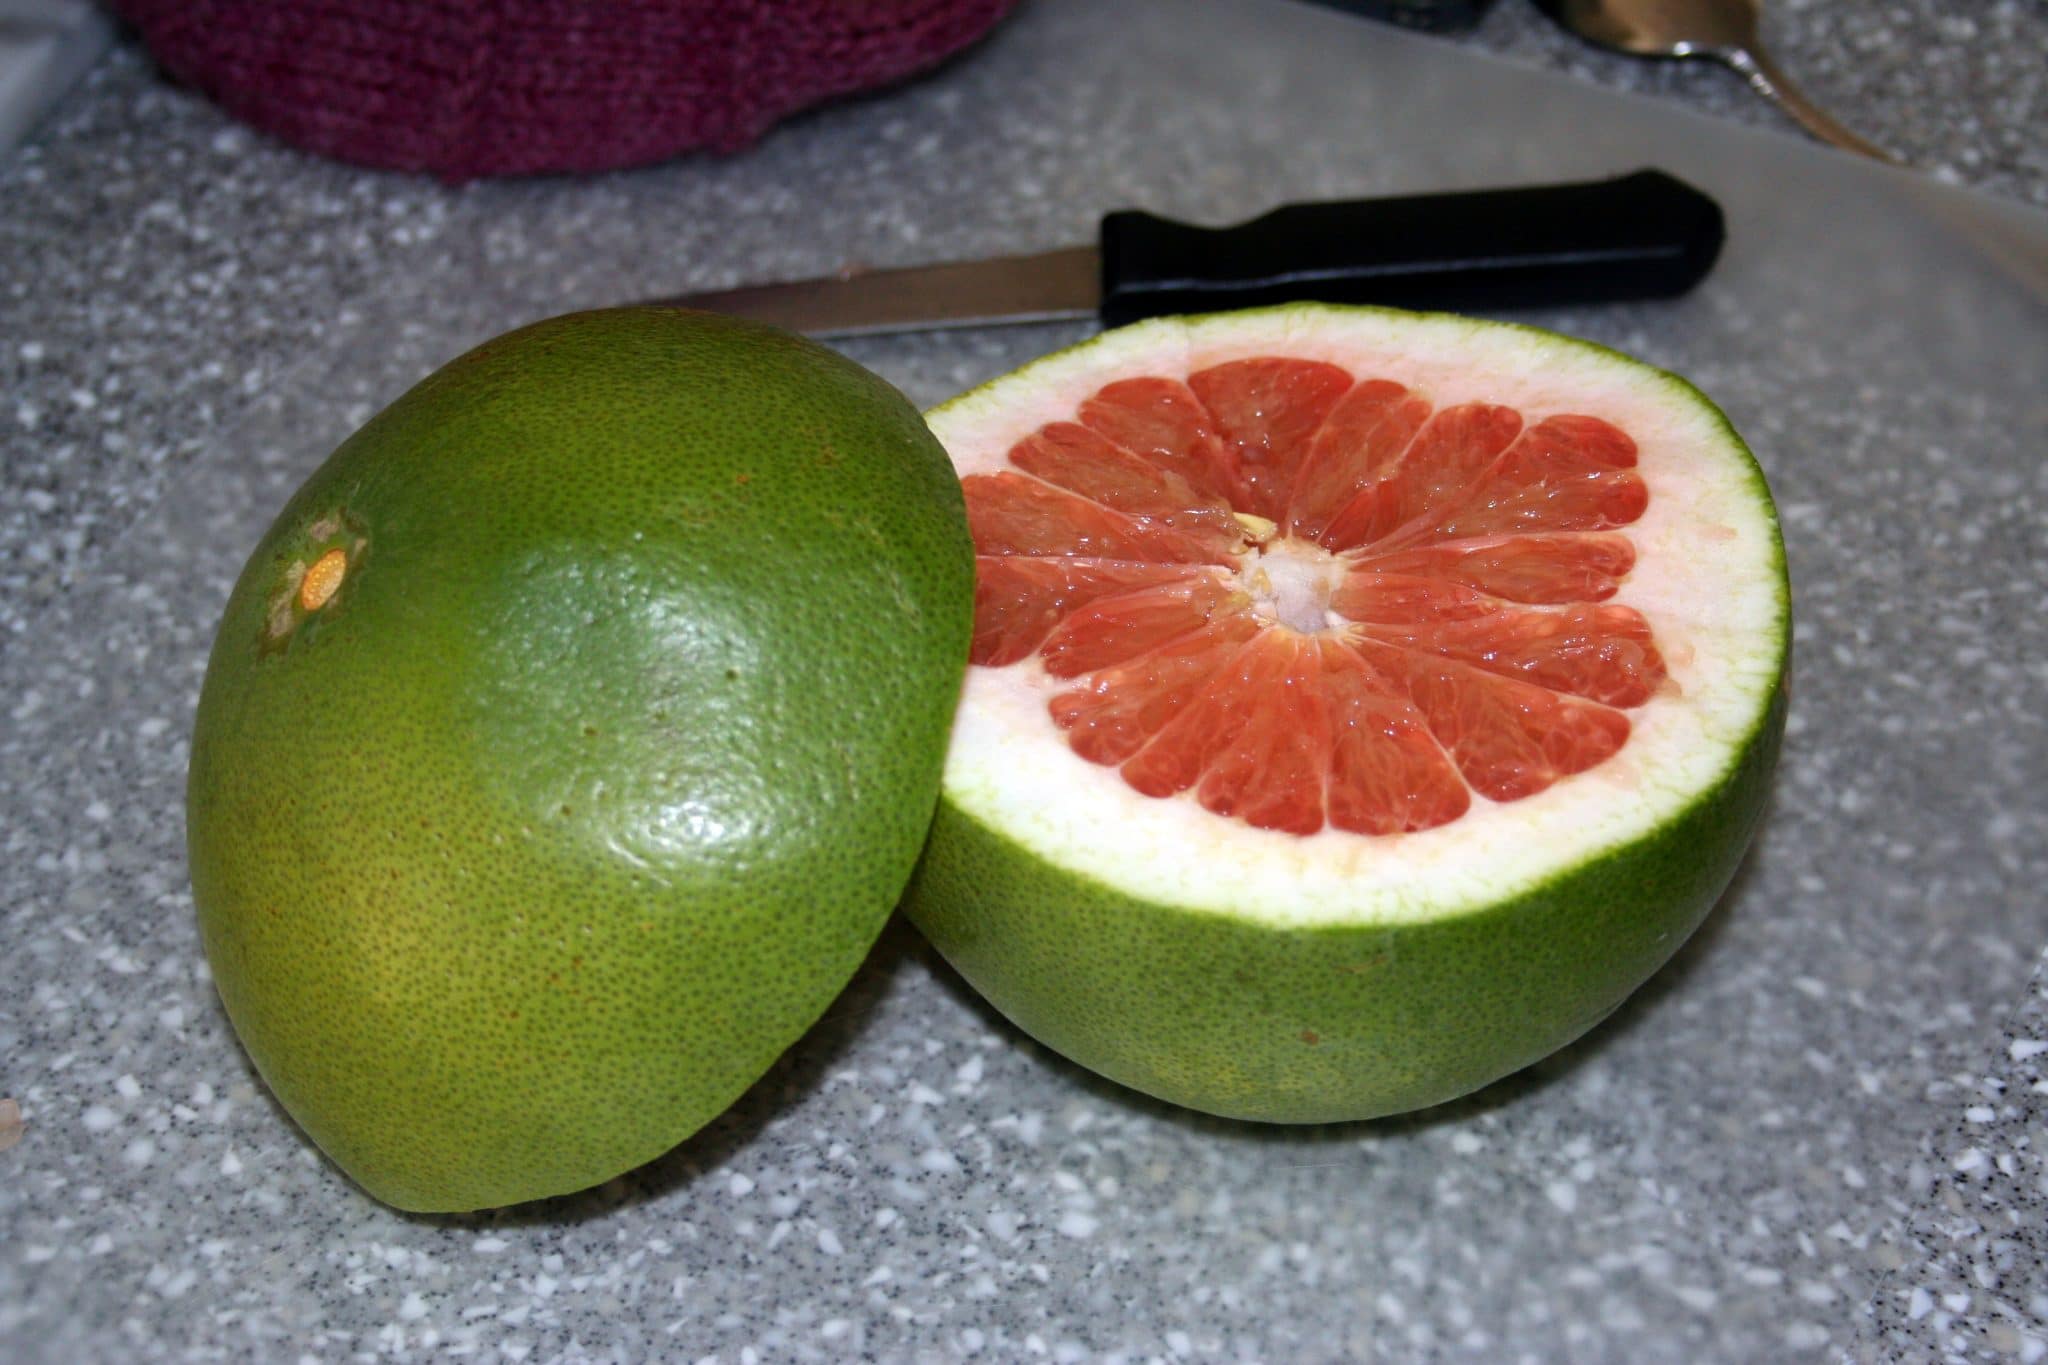 Pomelo sliced in half to show interior, looks like grapefruit.